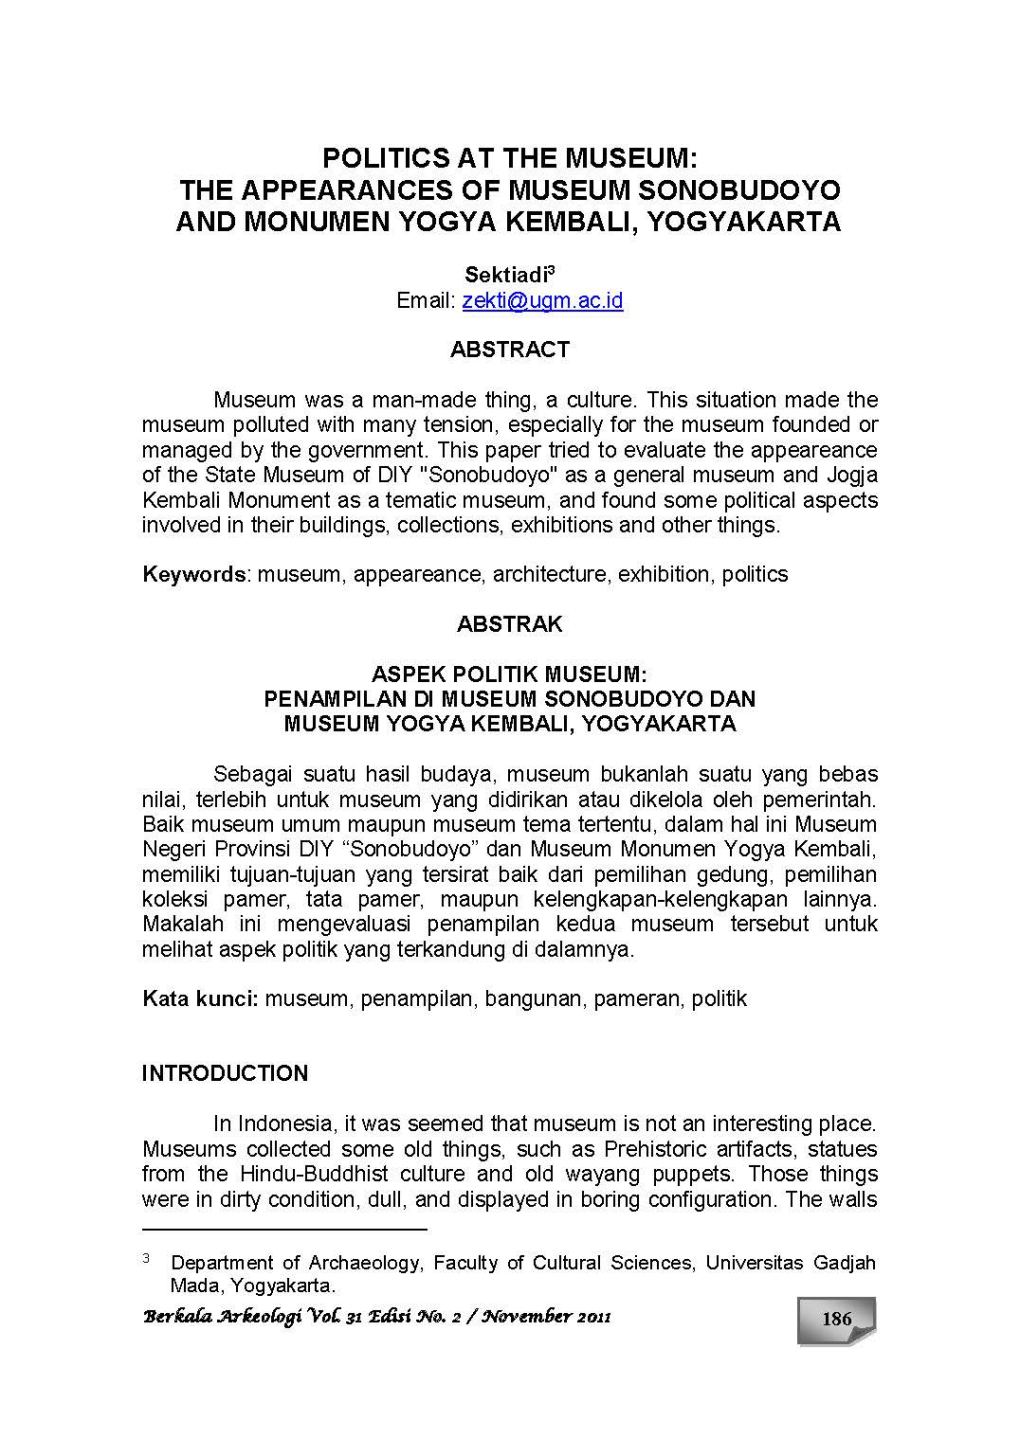 The Appearances of Museum Sonobudoyo and Monumen Yogya Kembali, Yogyakarta